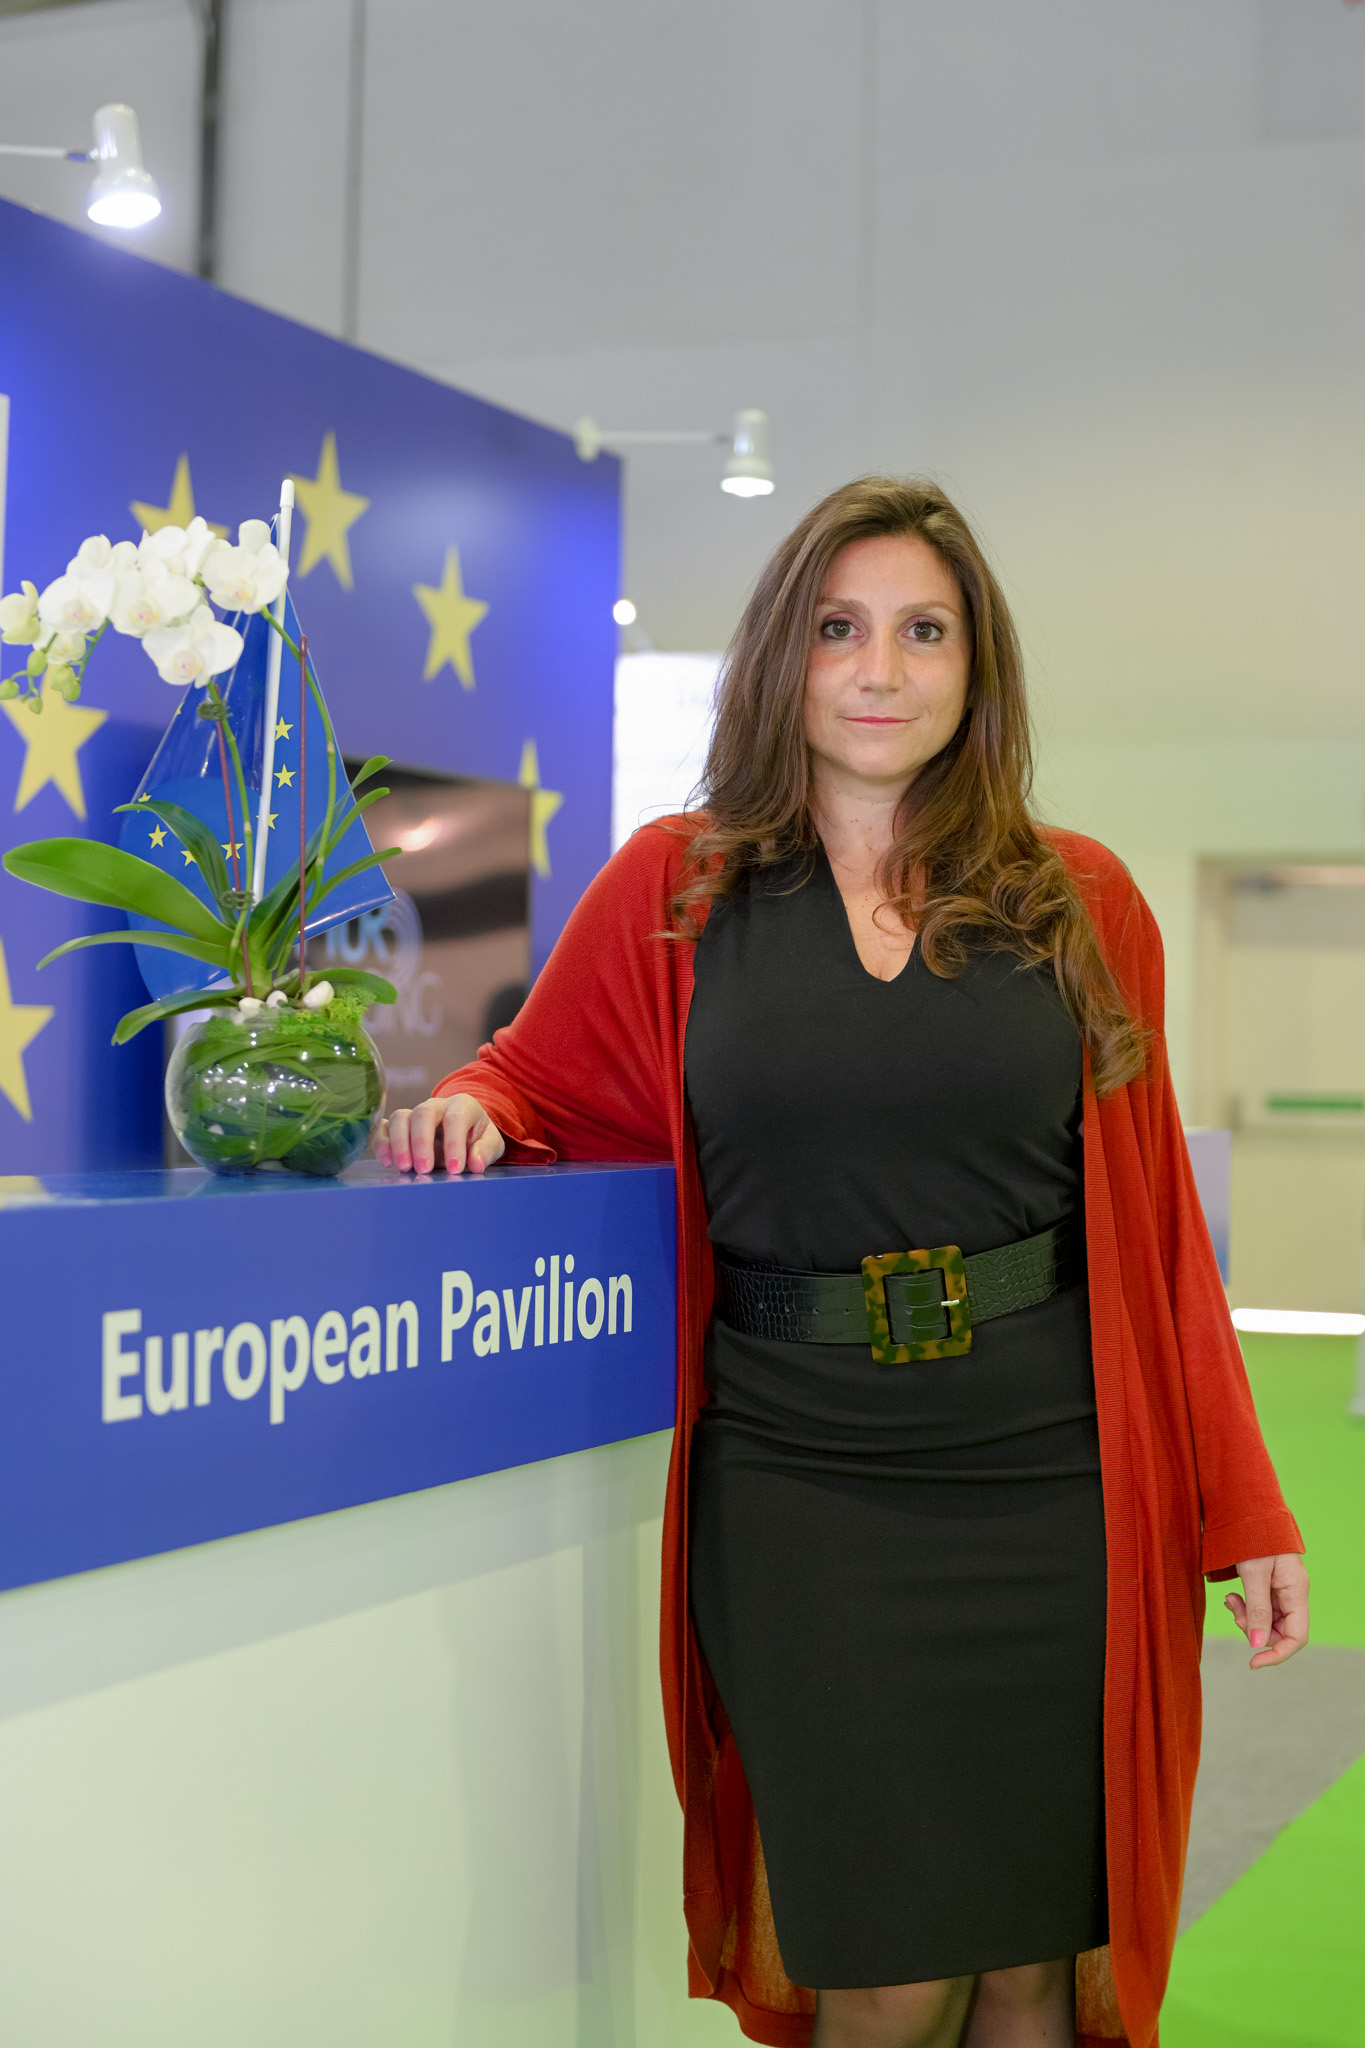 Photo of Sara at the European Pavilion